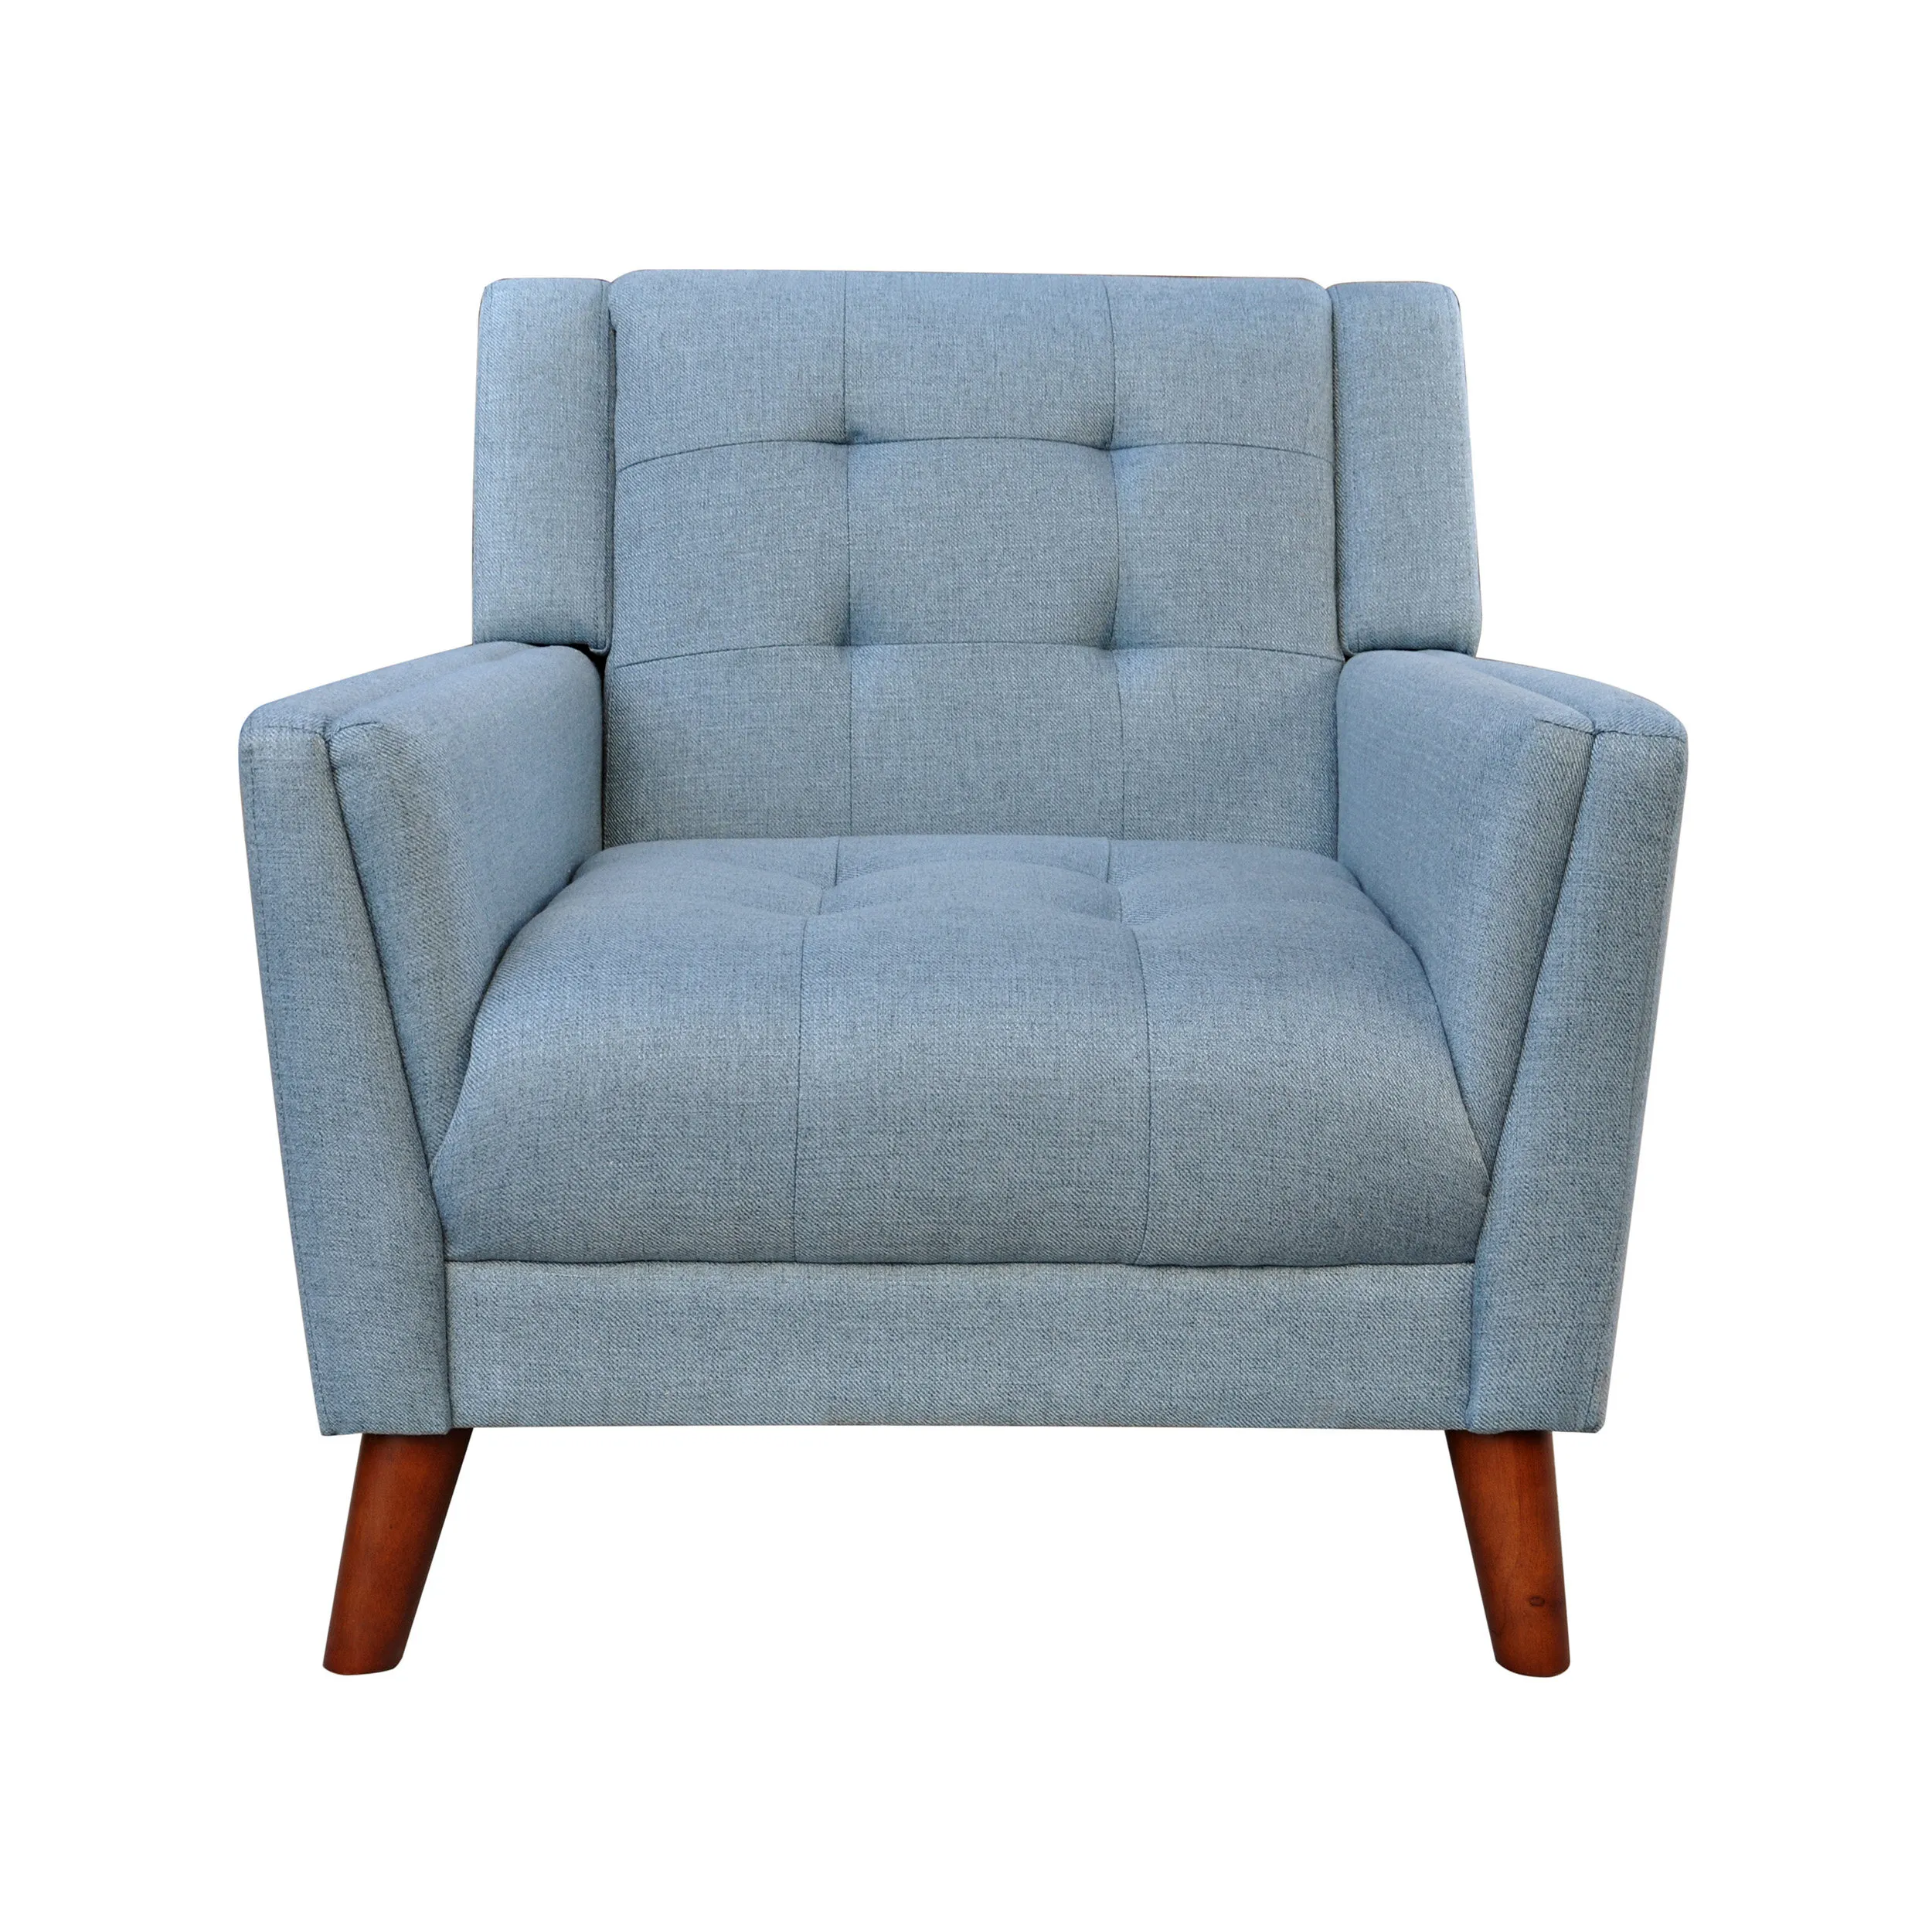 Merax Mid-century Armchair Accent Chair